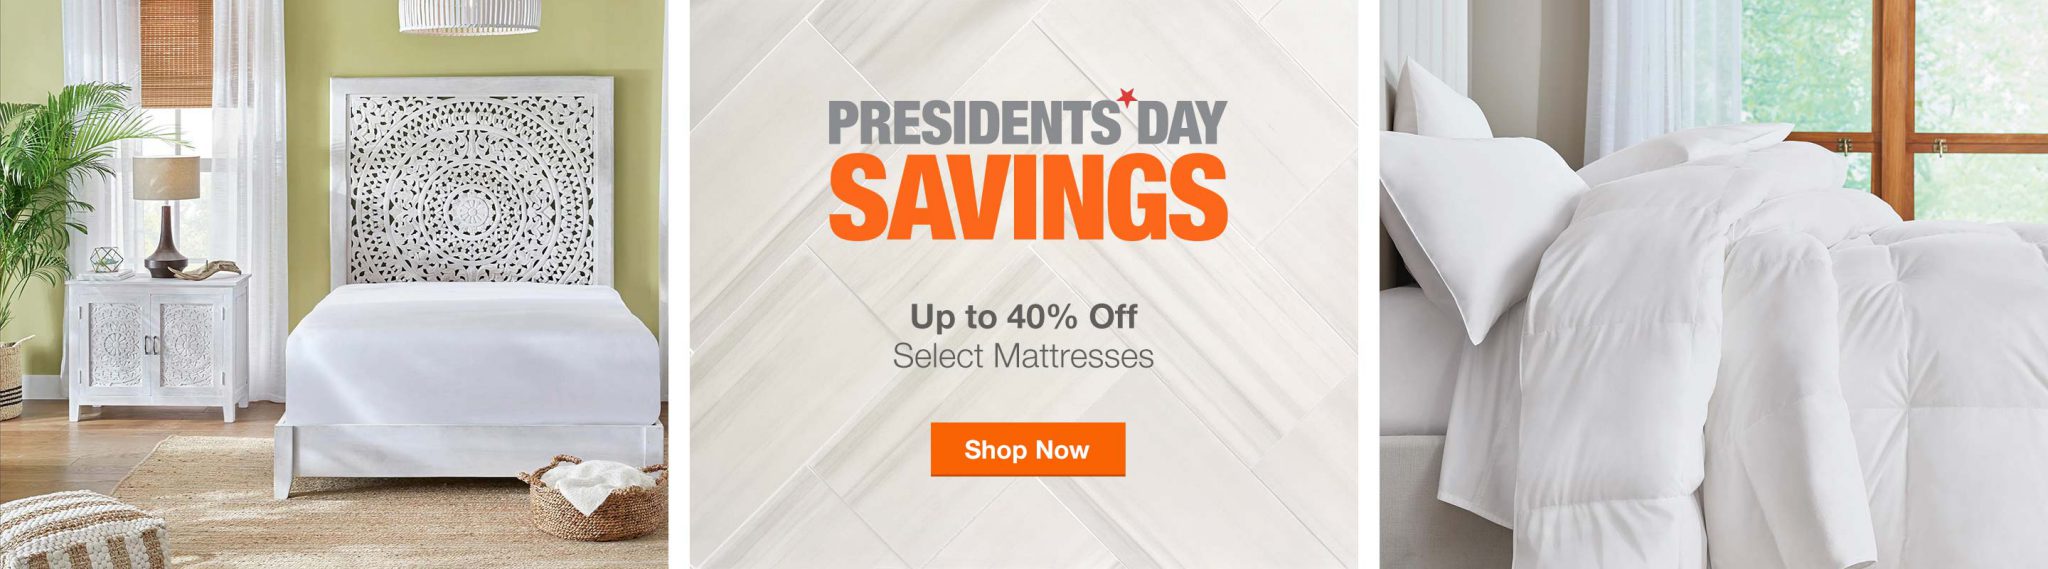 Massive Savings on President's Day Mattress Sale in 2020